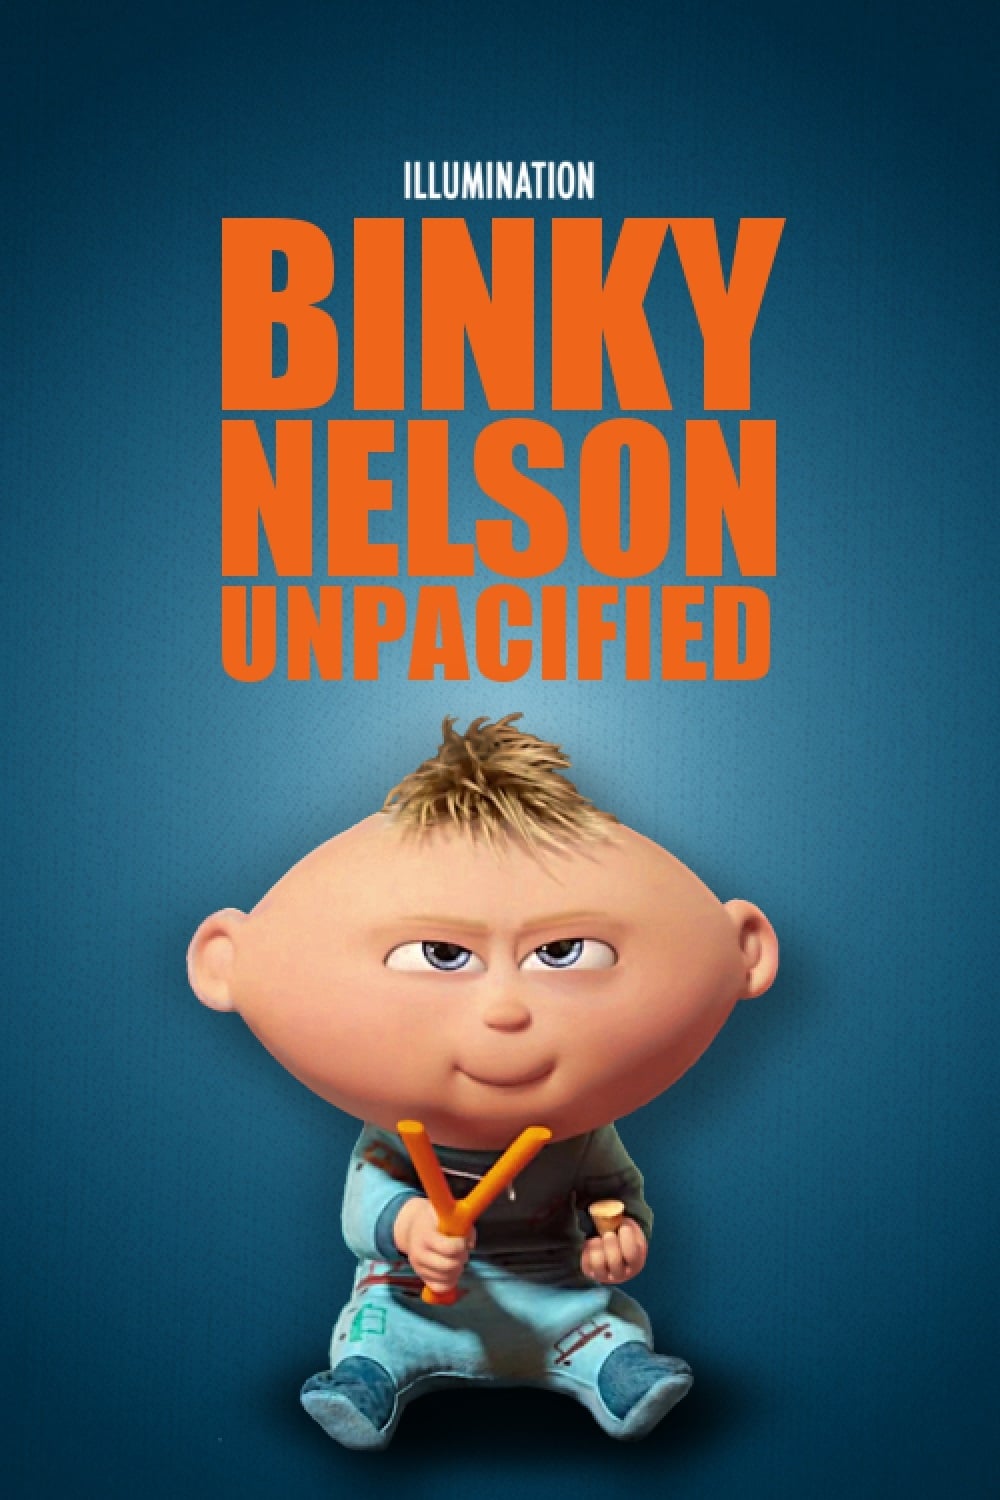 Binky Nelson sans tétine